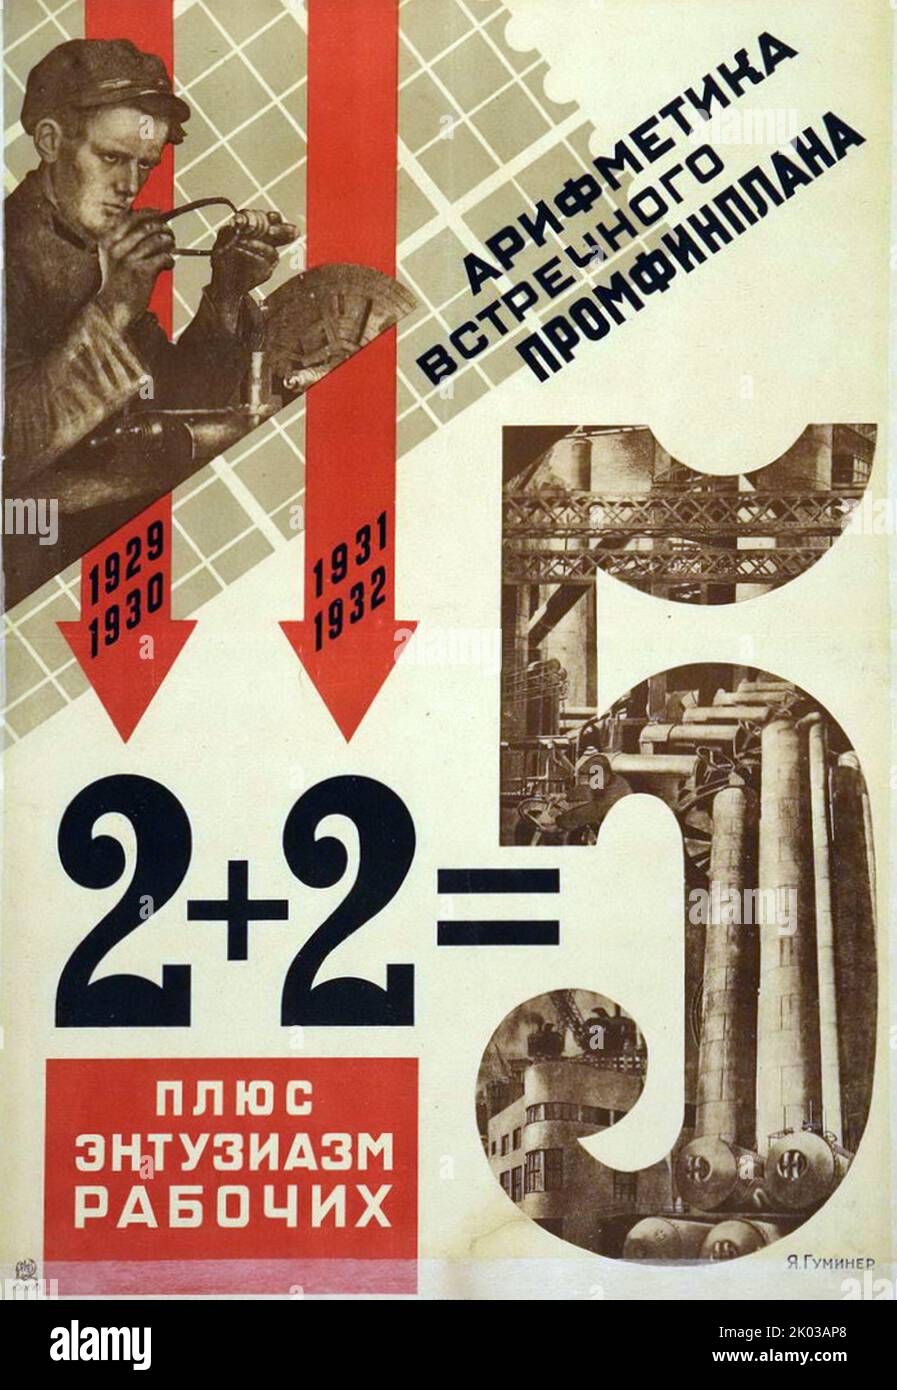 Primer Plan Quinquenal, póster de propaganda soviética de 1931. Por Yakov Guminer. Foto de stock